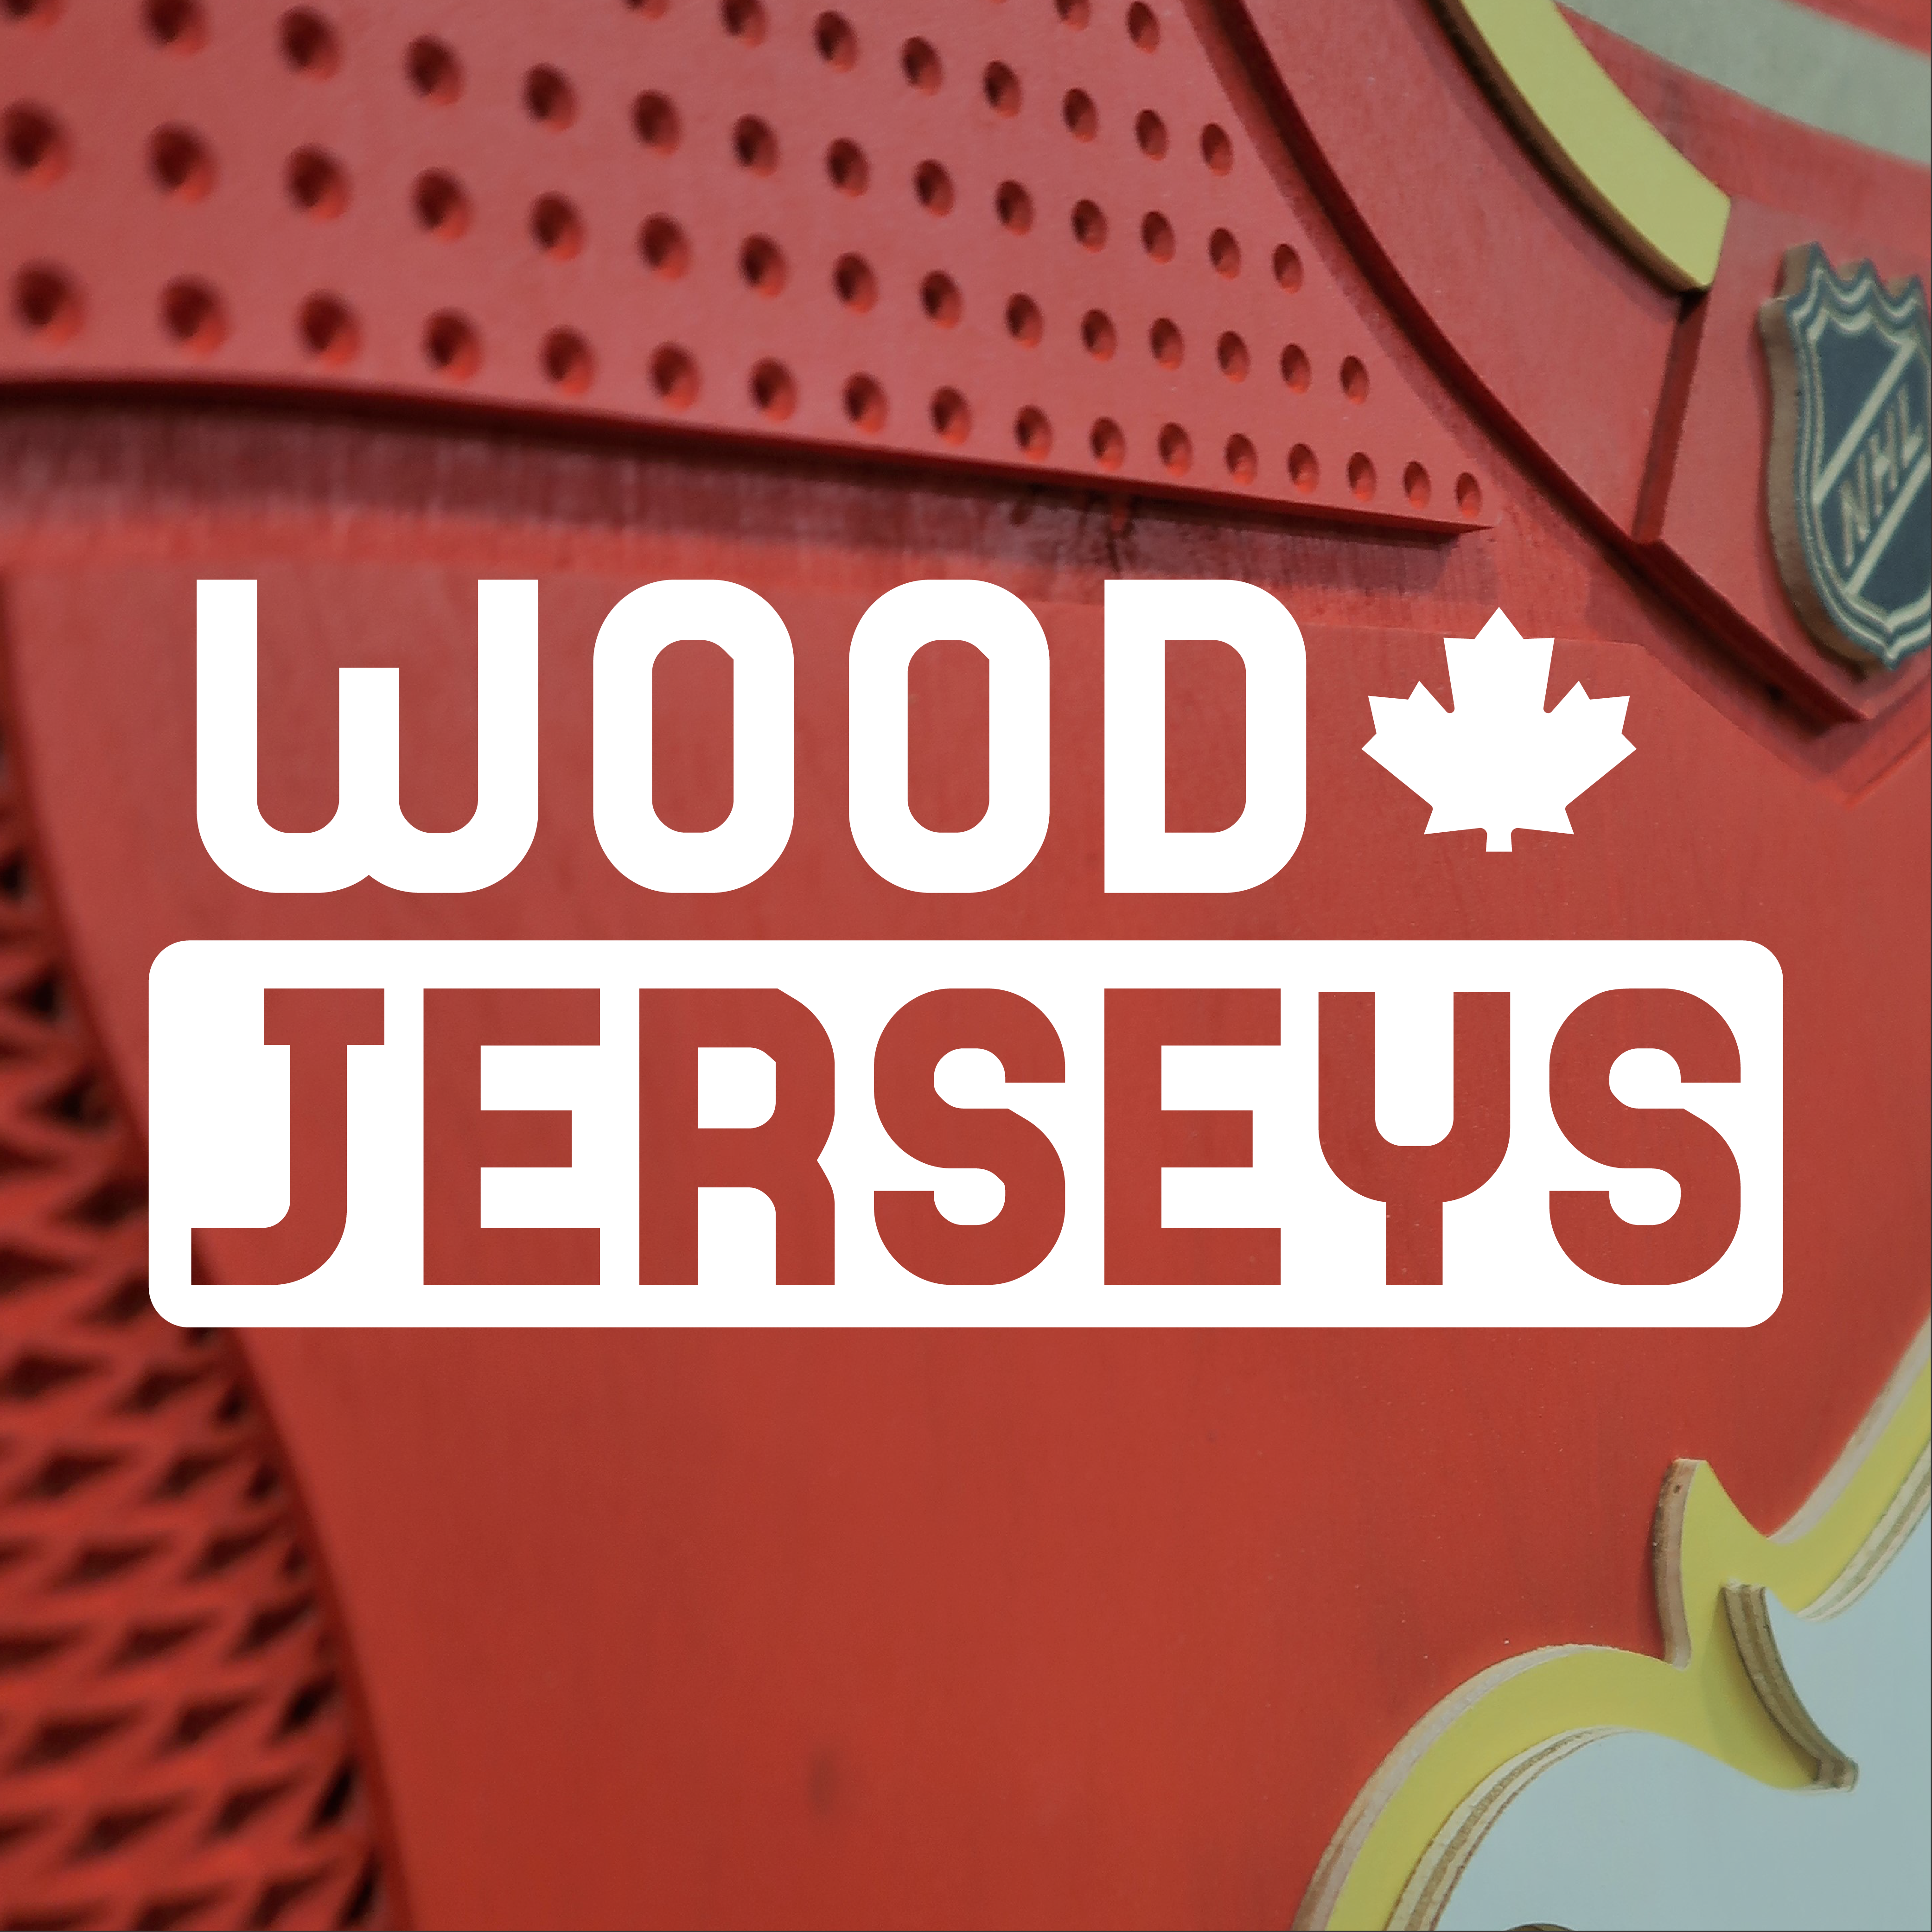 Toronto Maple Leafs Home WoodJersey – WoodJerseys